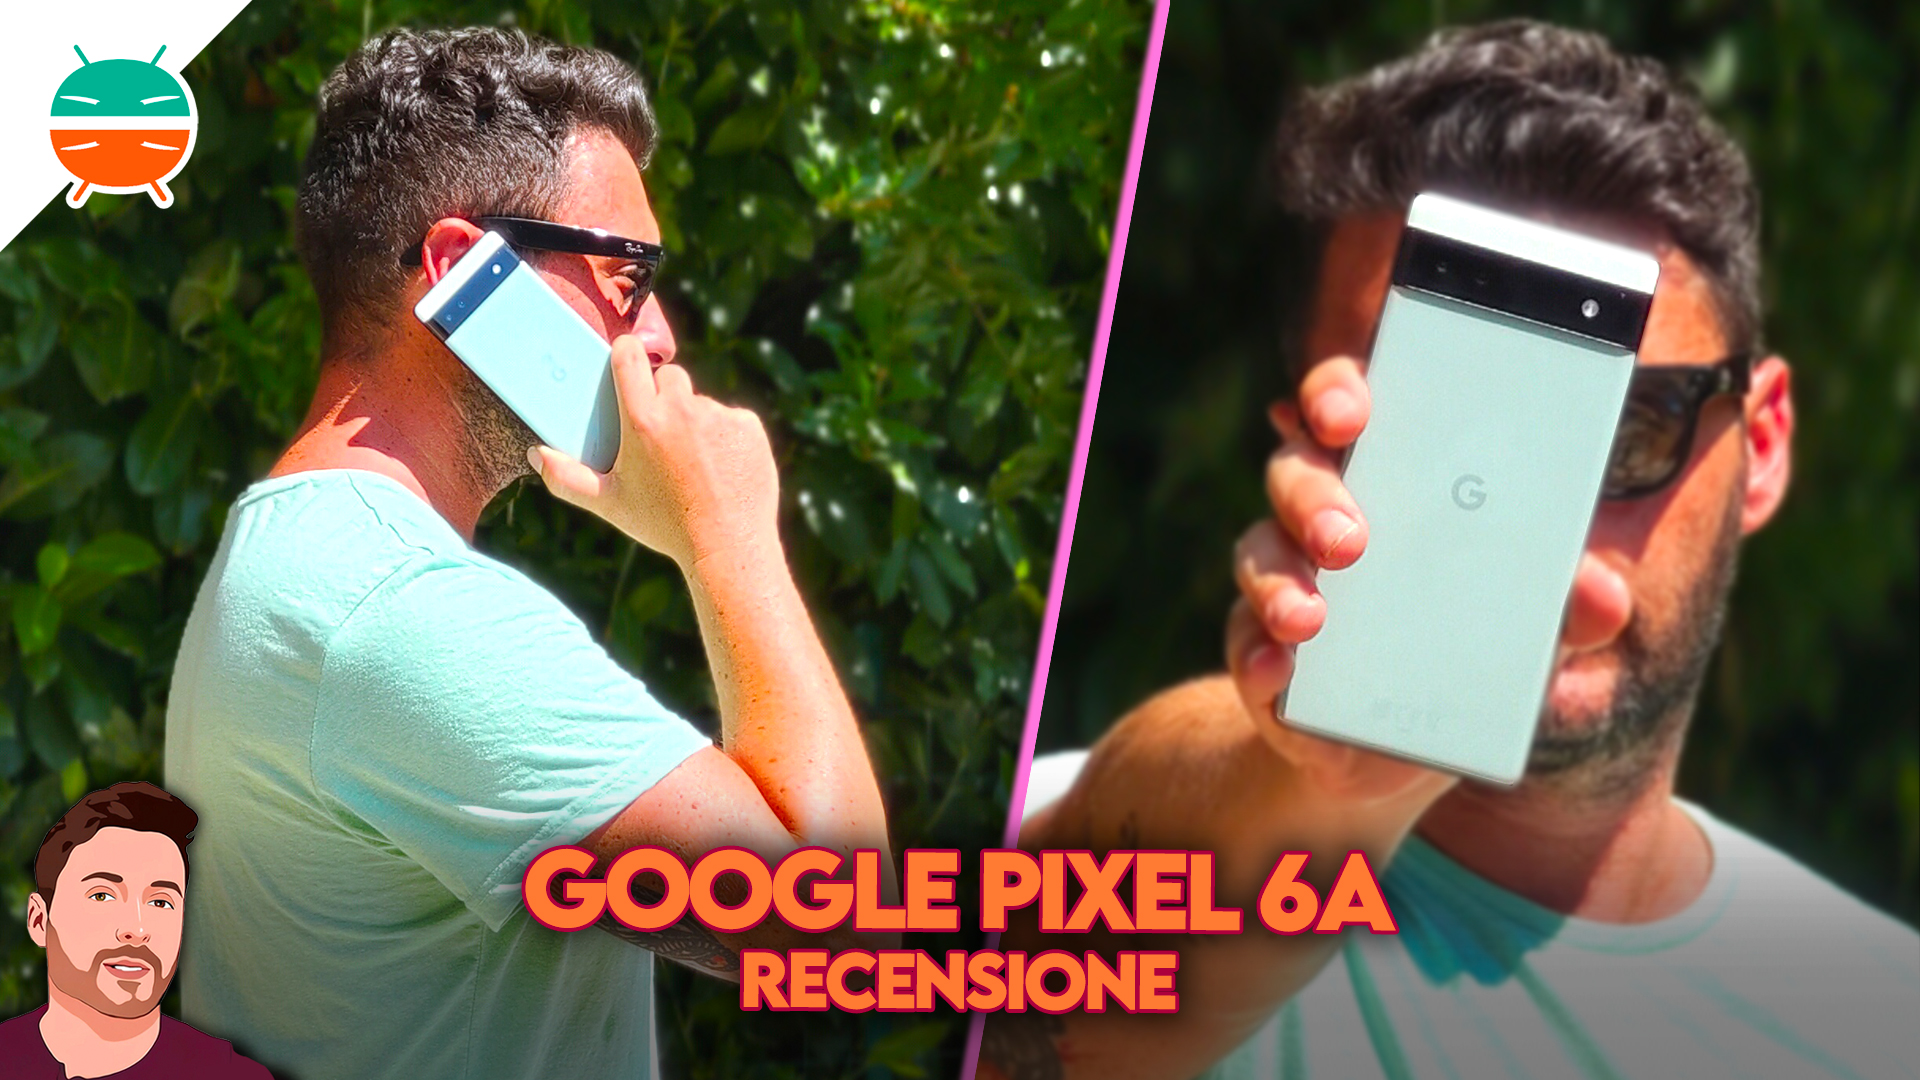 Google Pixel 6a Review: A Great Mid-Range Phone That Falls A Bit Short ...